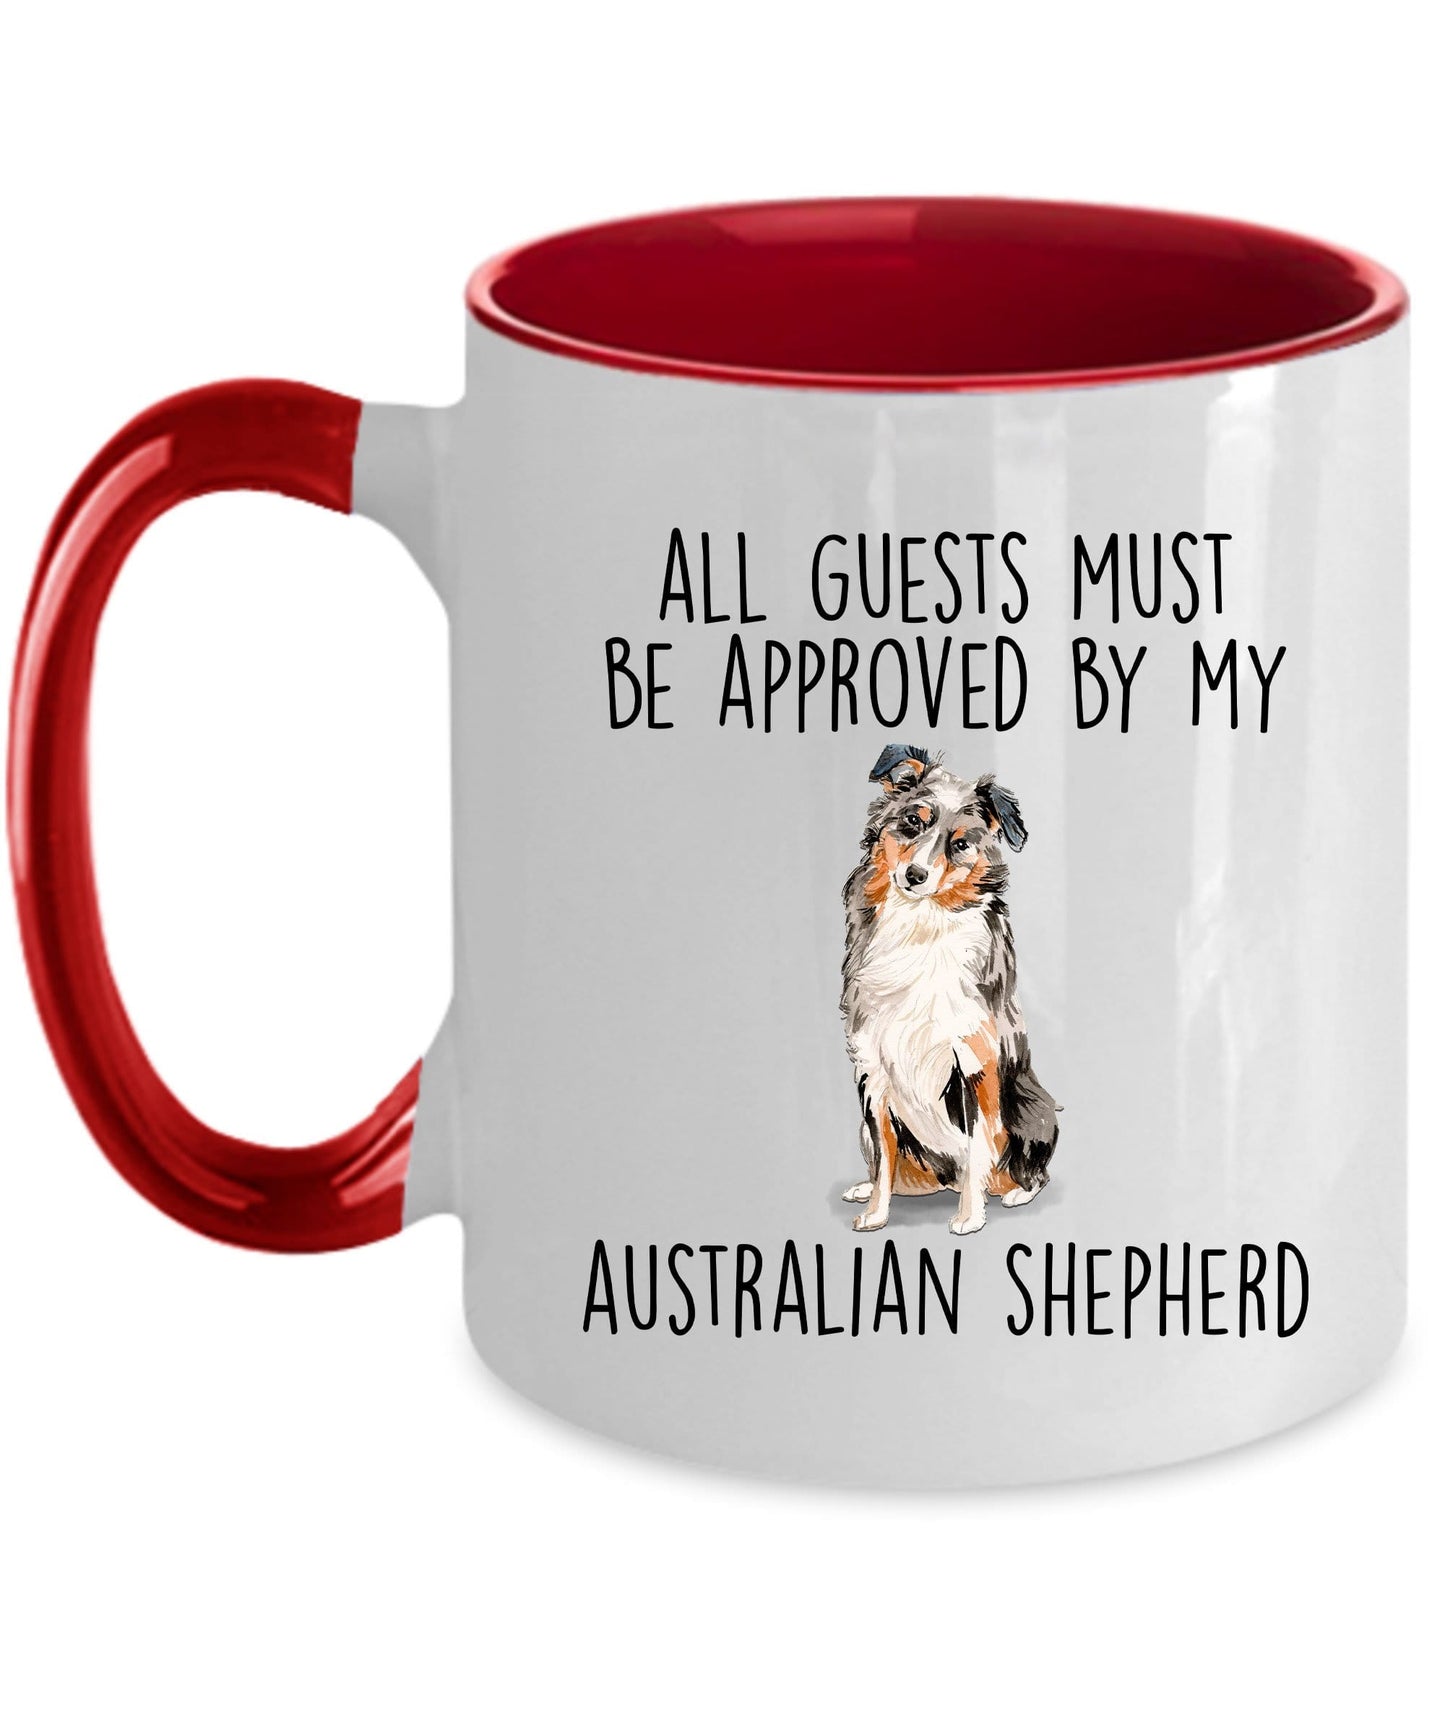 Australian Shepherd Dog Funny Coffee Mug - All guests Must Be Approved by my Australian Shepherd